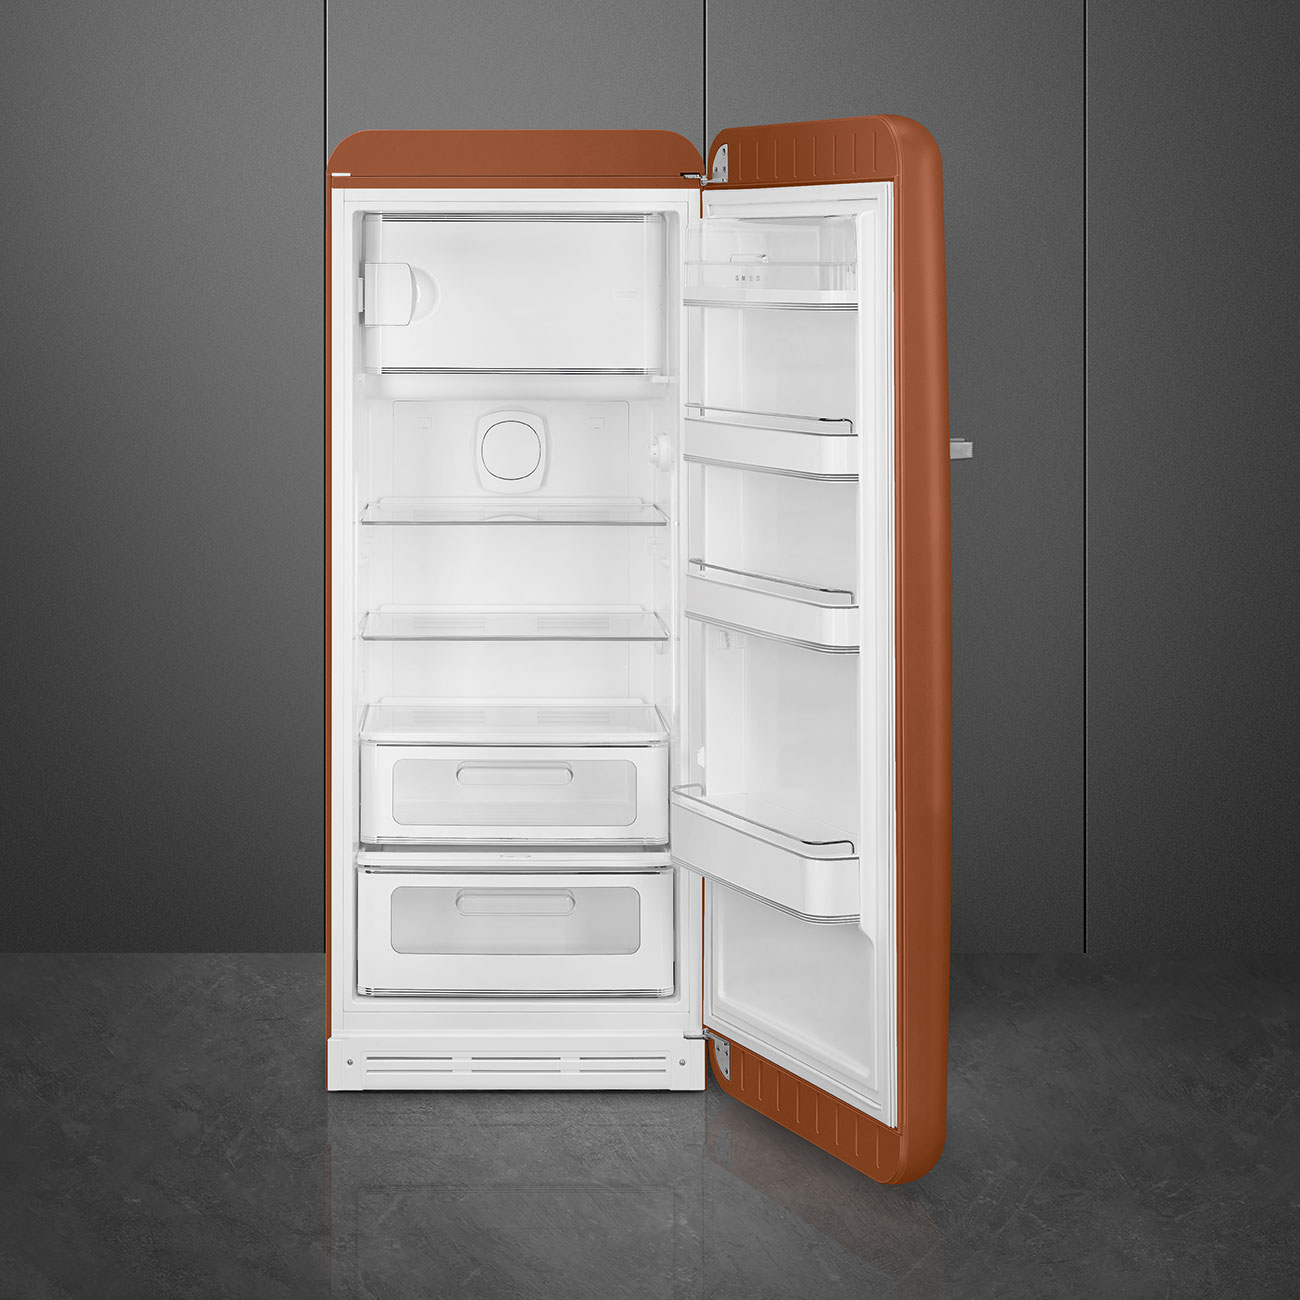 Rust refrigerator - Smeg_4